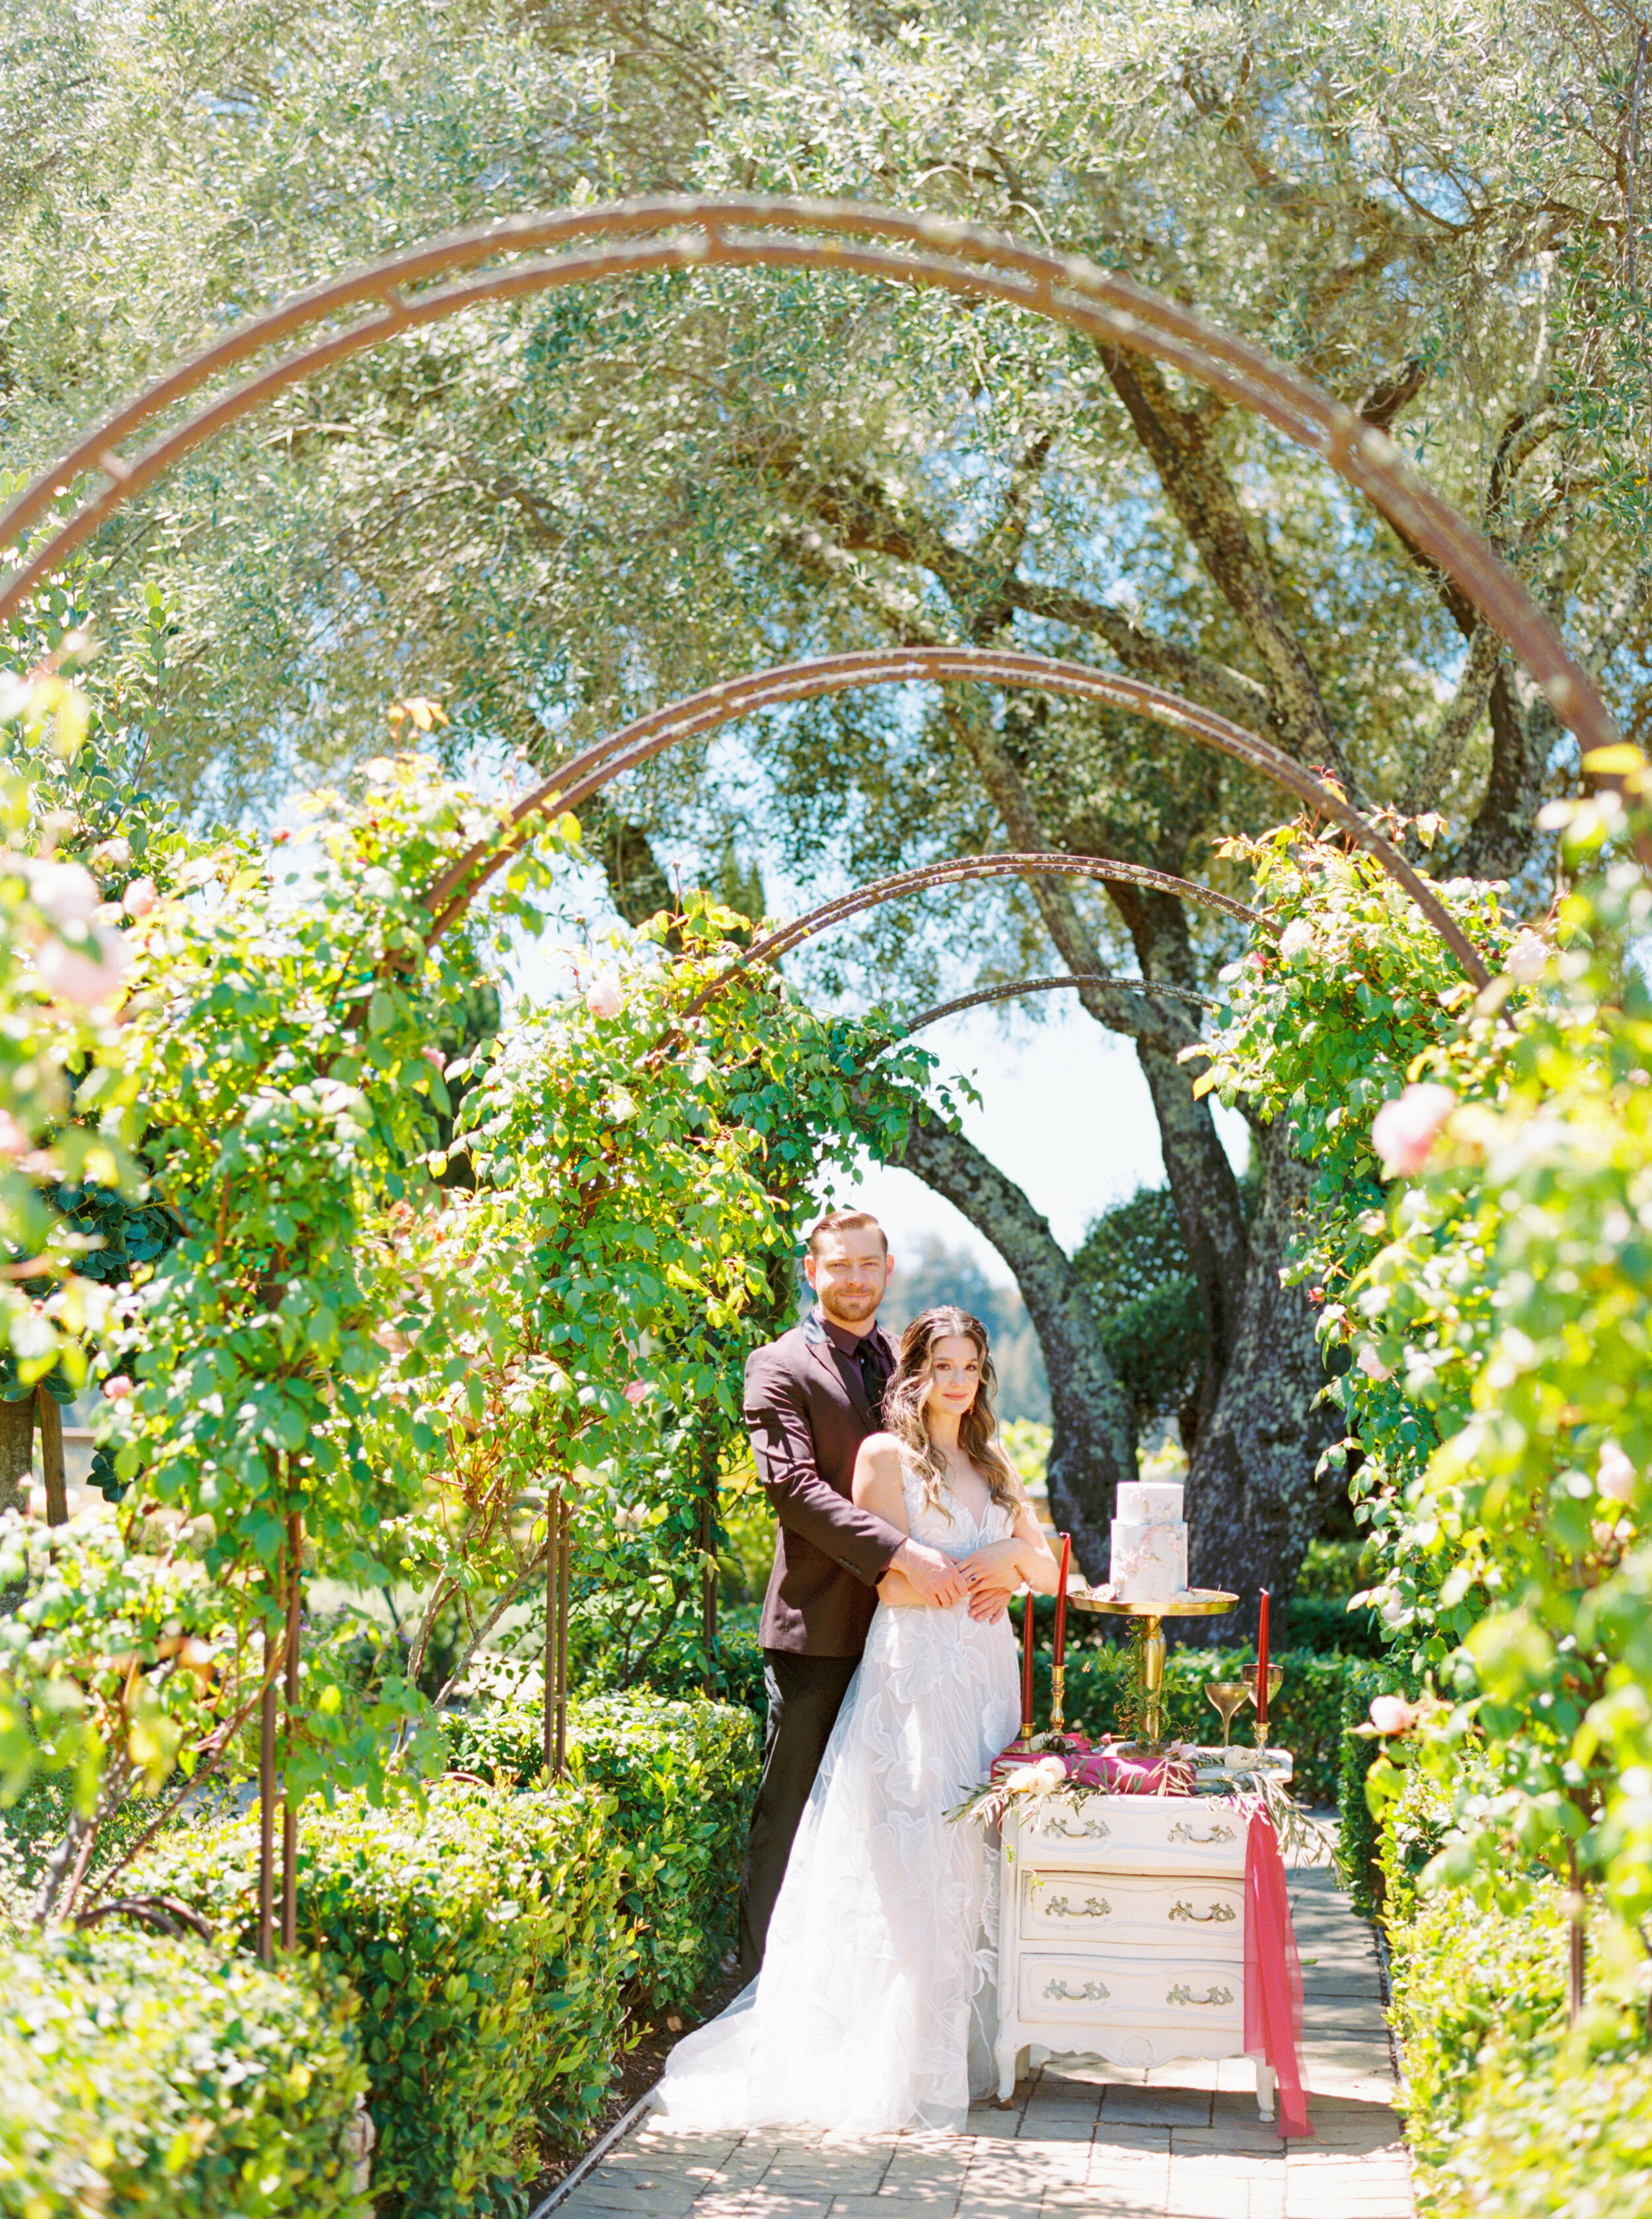 Regale Winery and Vineyards Wedding - Sarahi Hadden Photography-490.jpg